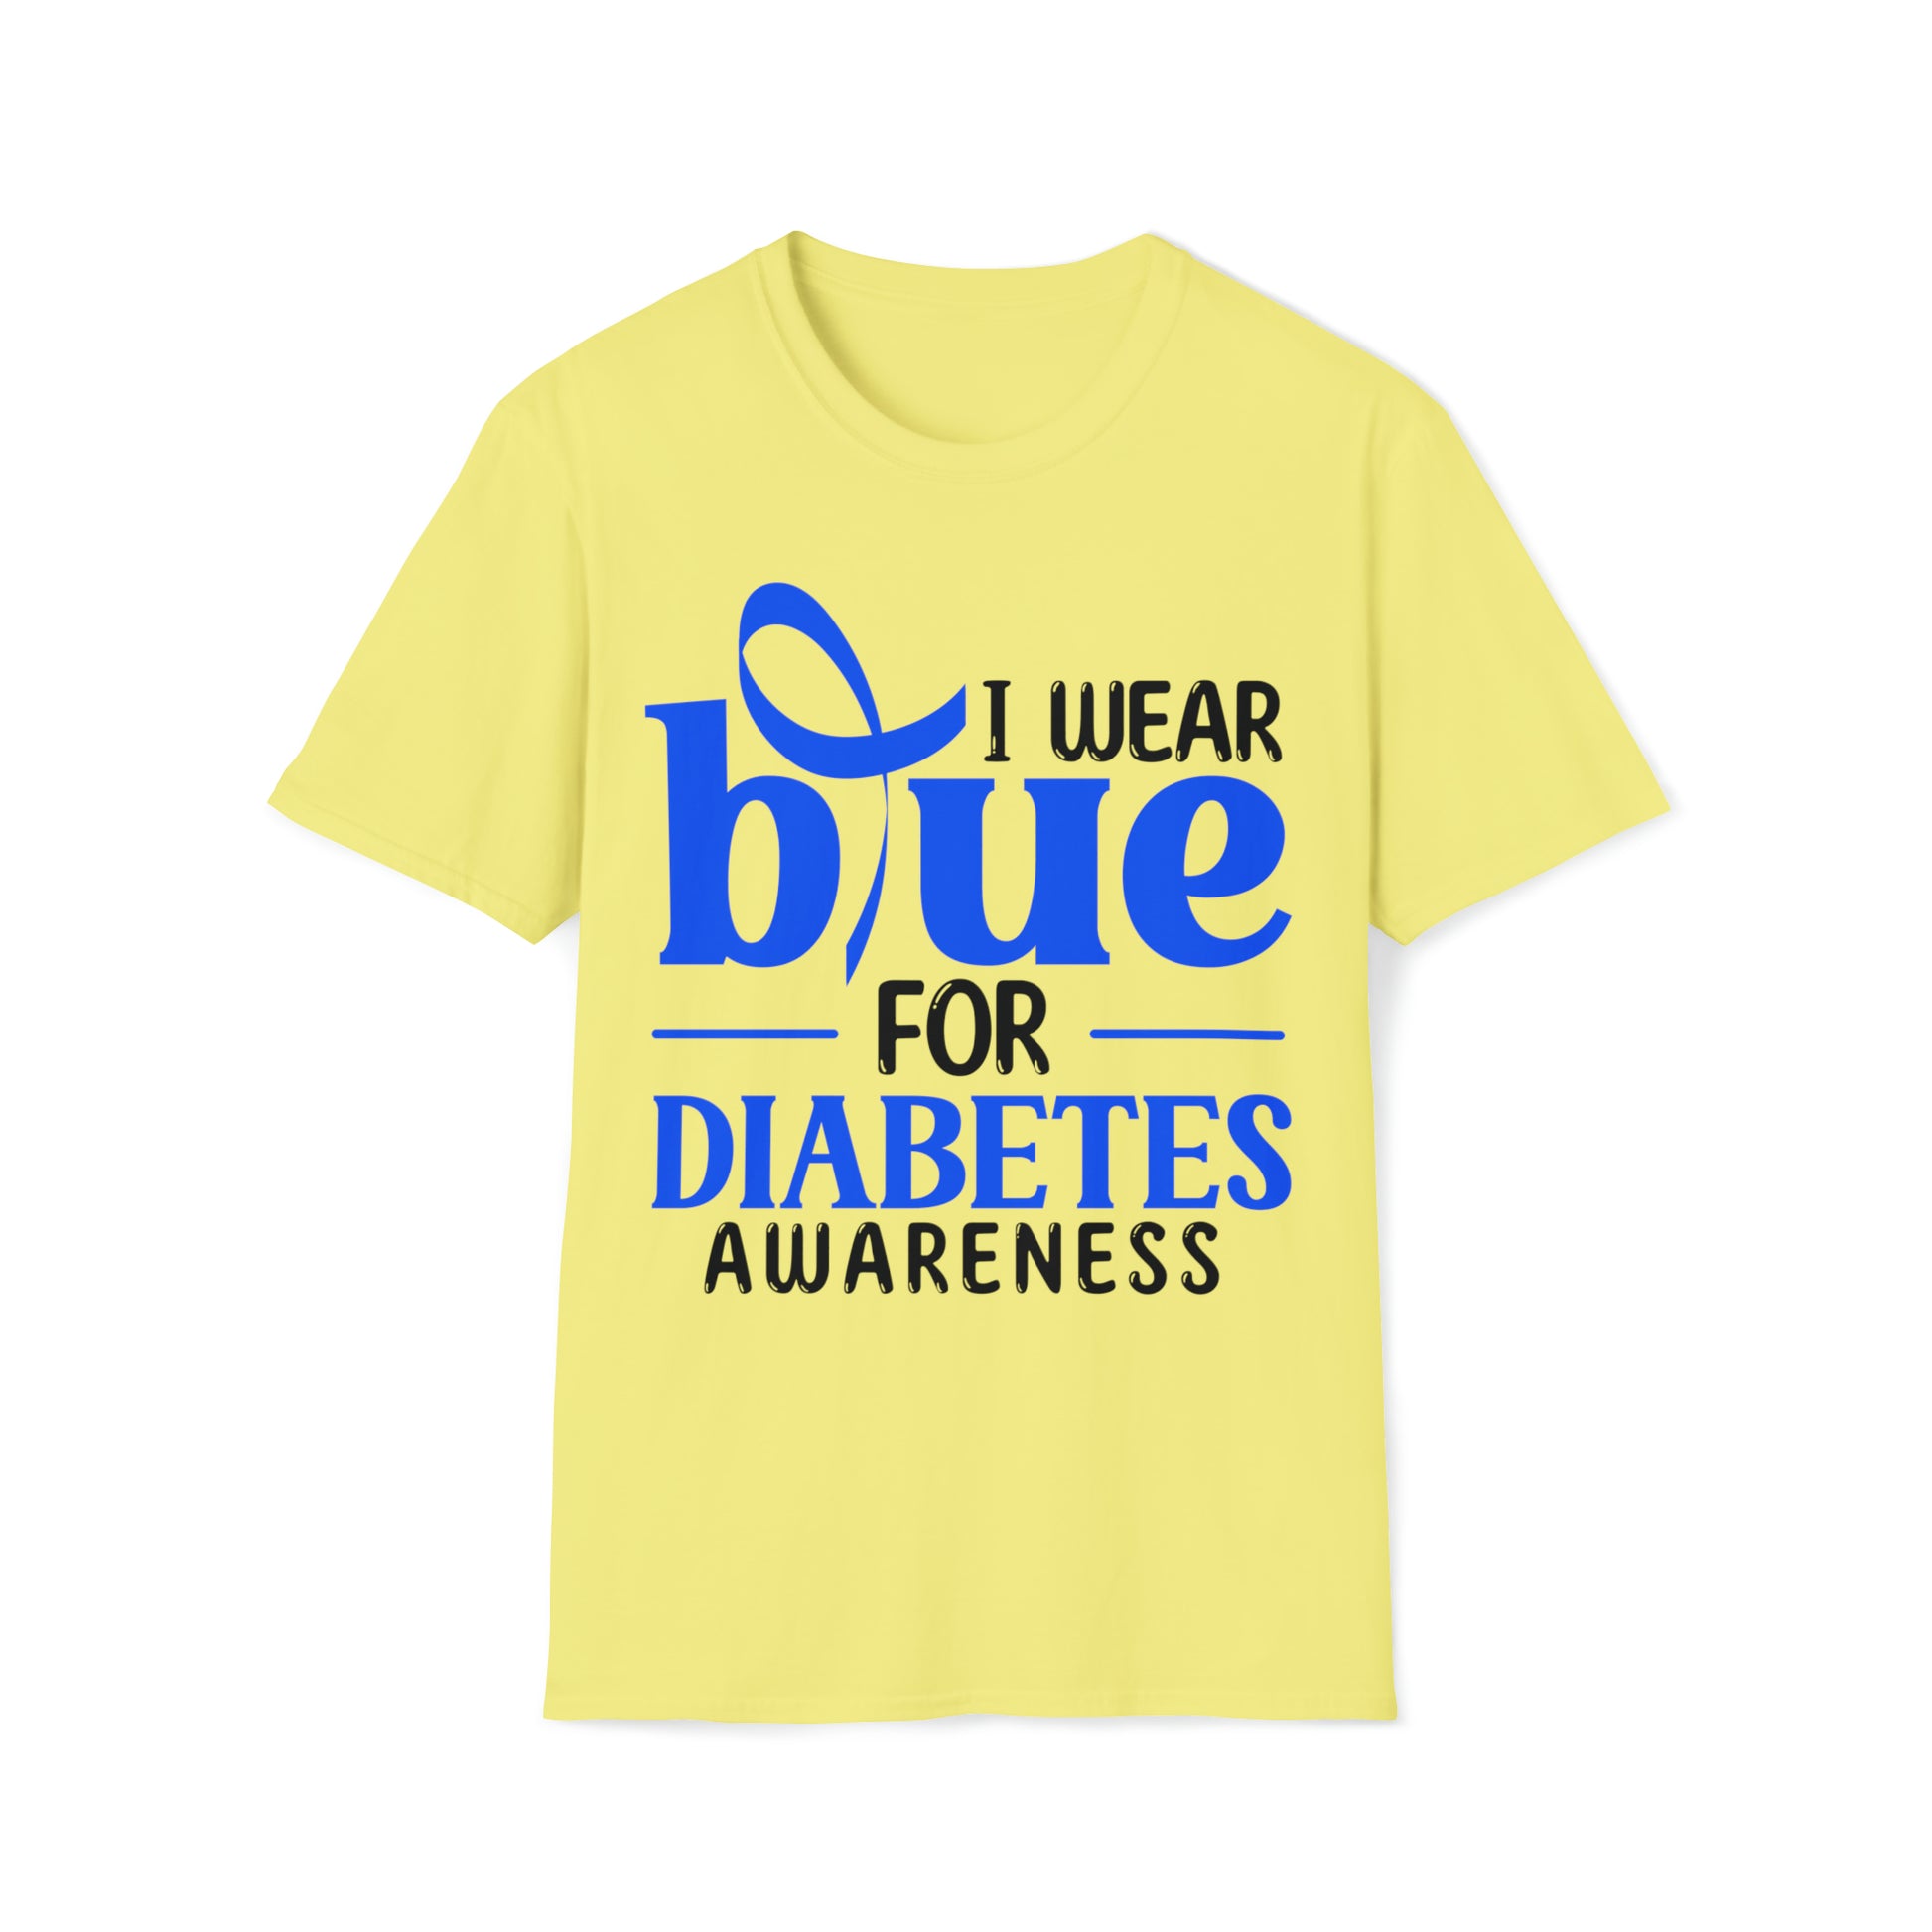 I Wear Blue for Diabetes Awareness Shirt